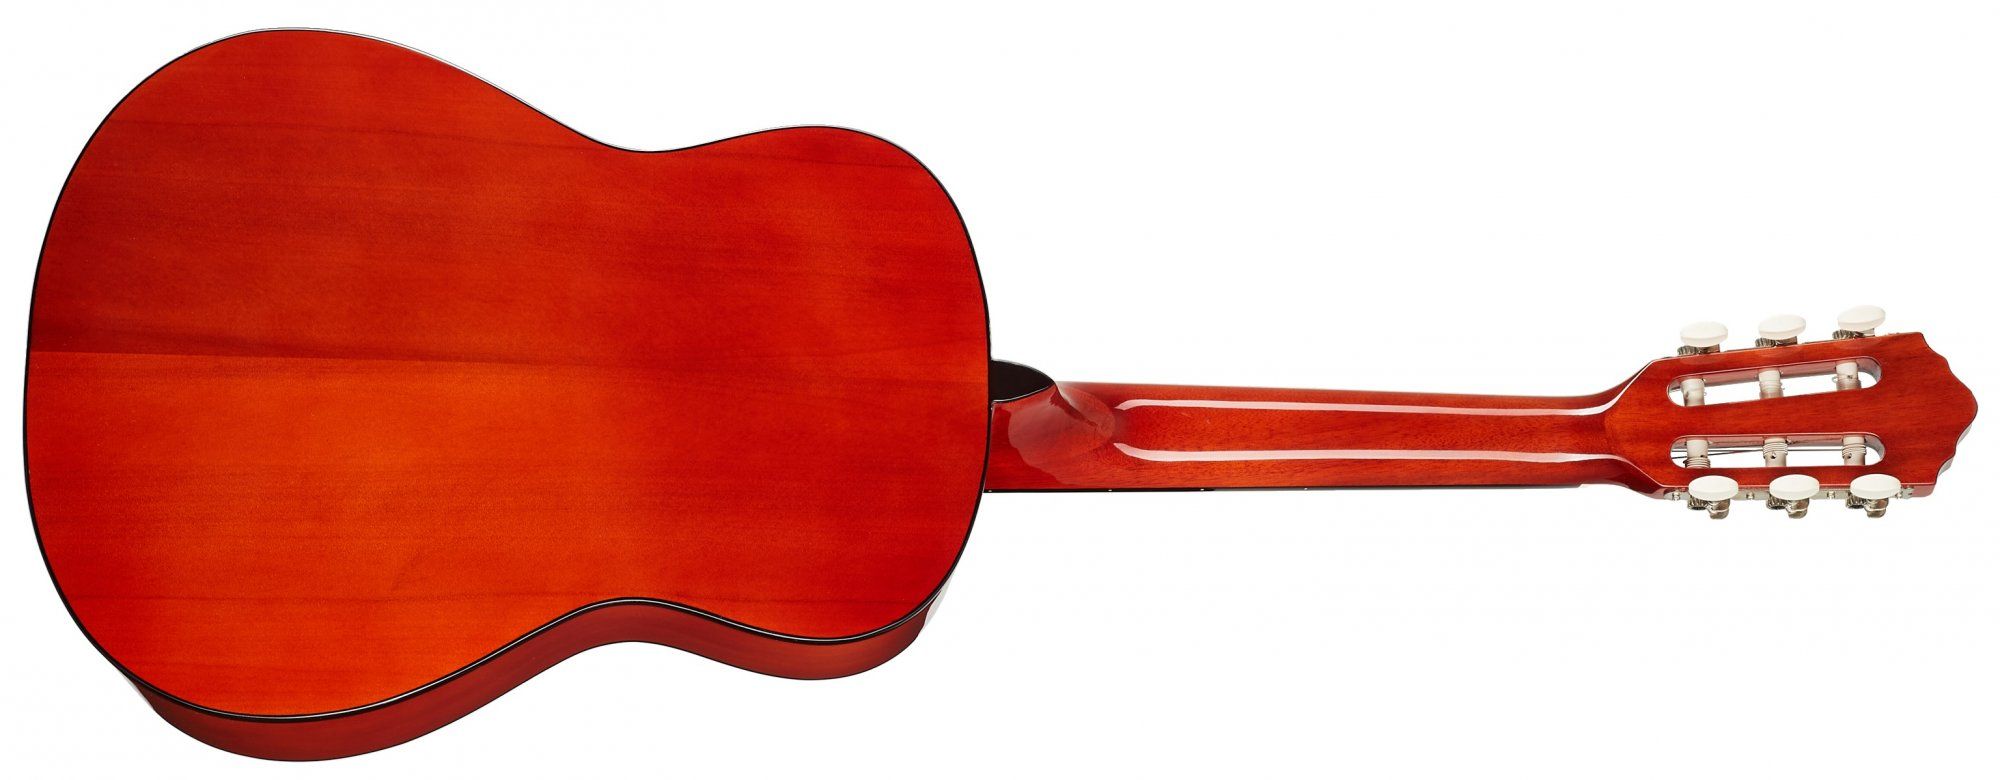  krásna akustická gitara oscar schmidt menzúra 559 mm vrstvený korpus lesklá povrchová úprava vhodná na hru trsátkami a prstami 